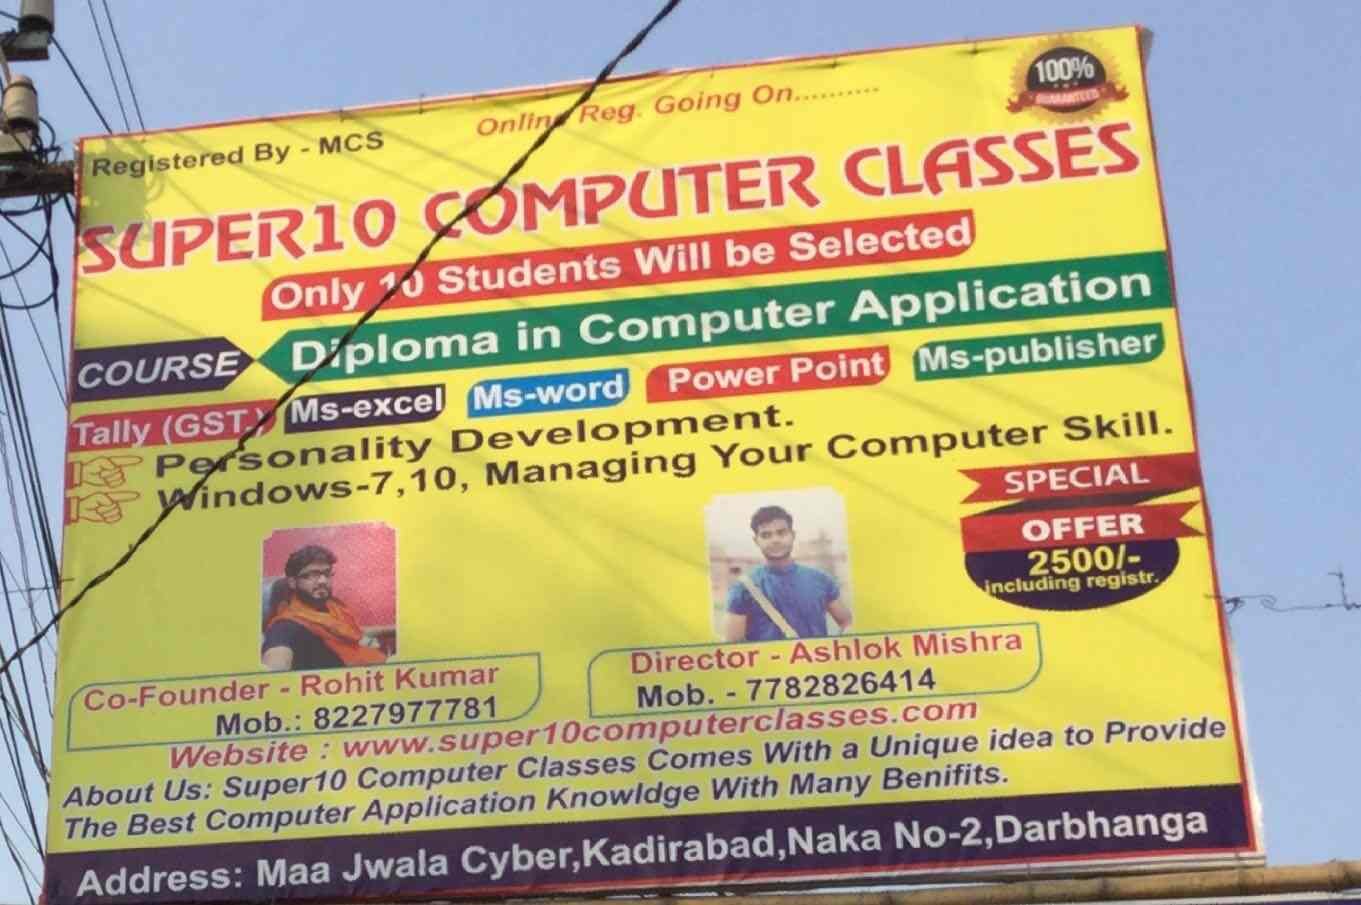 Superio Computer Classes